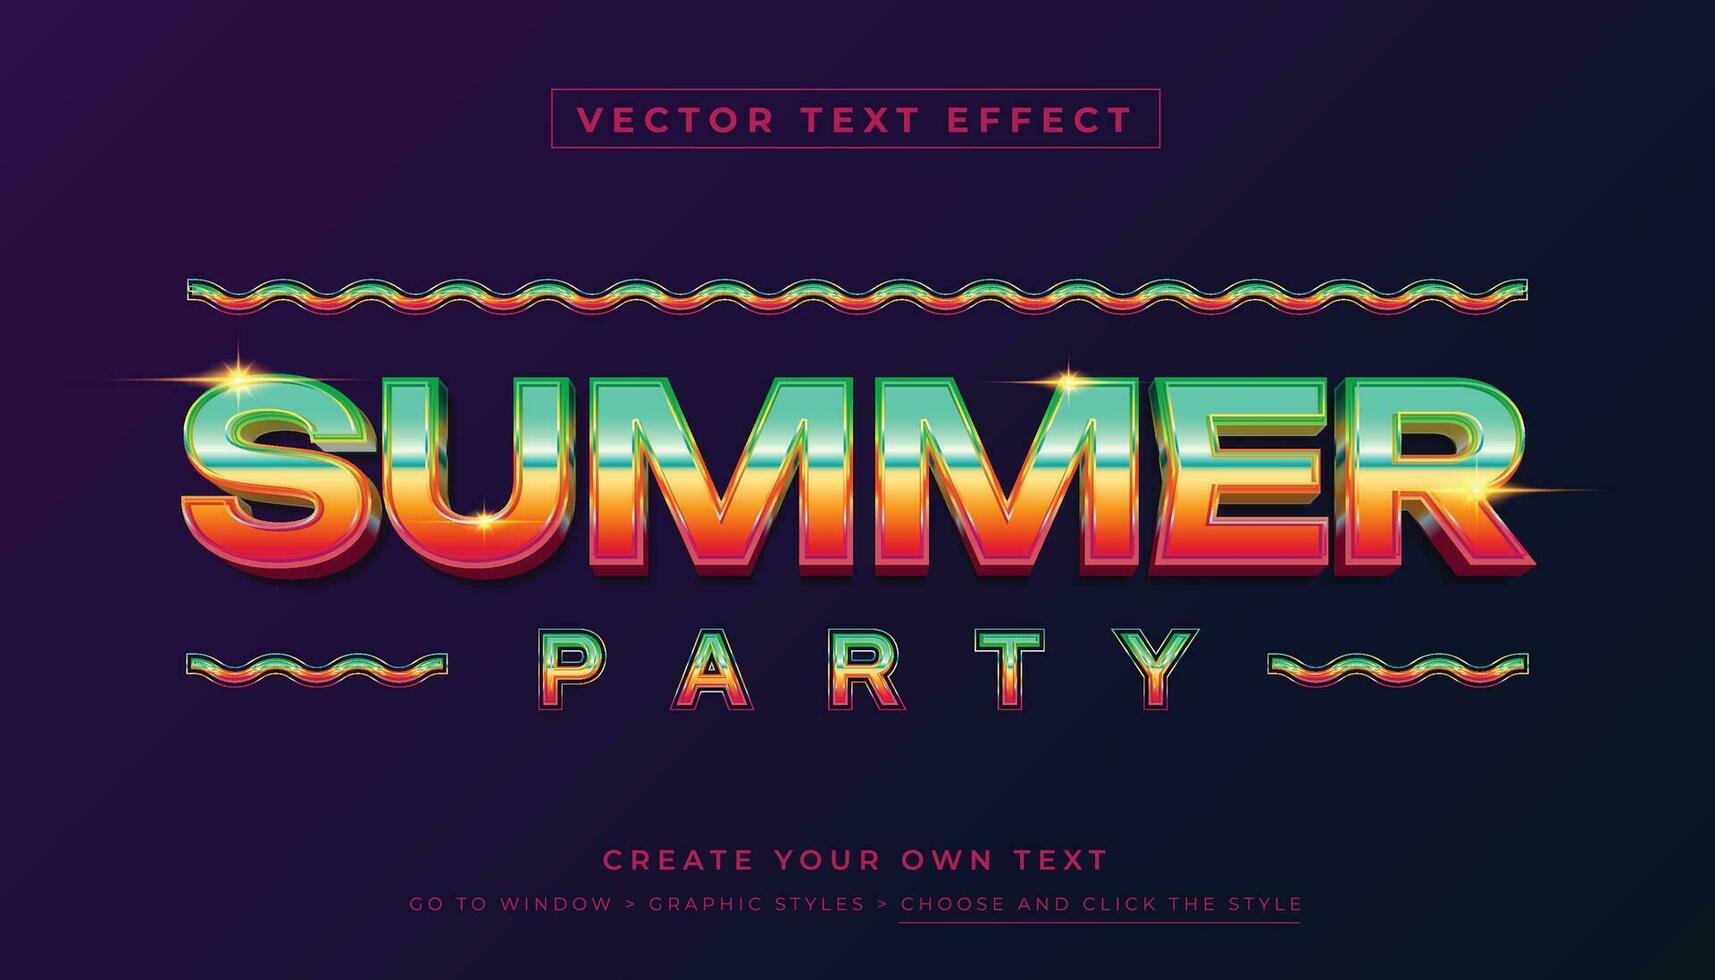 editable vector 3d vistoso arco iris texto efecto. verano noche retro fiesta gráfico estilo